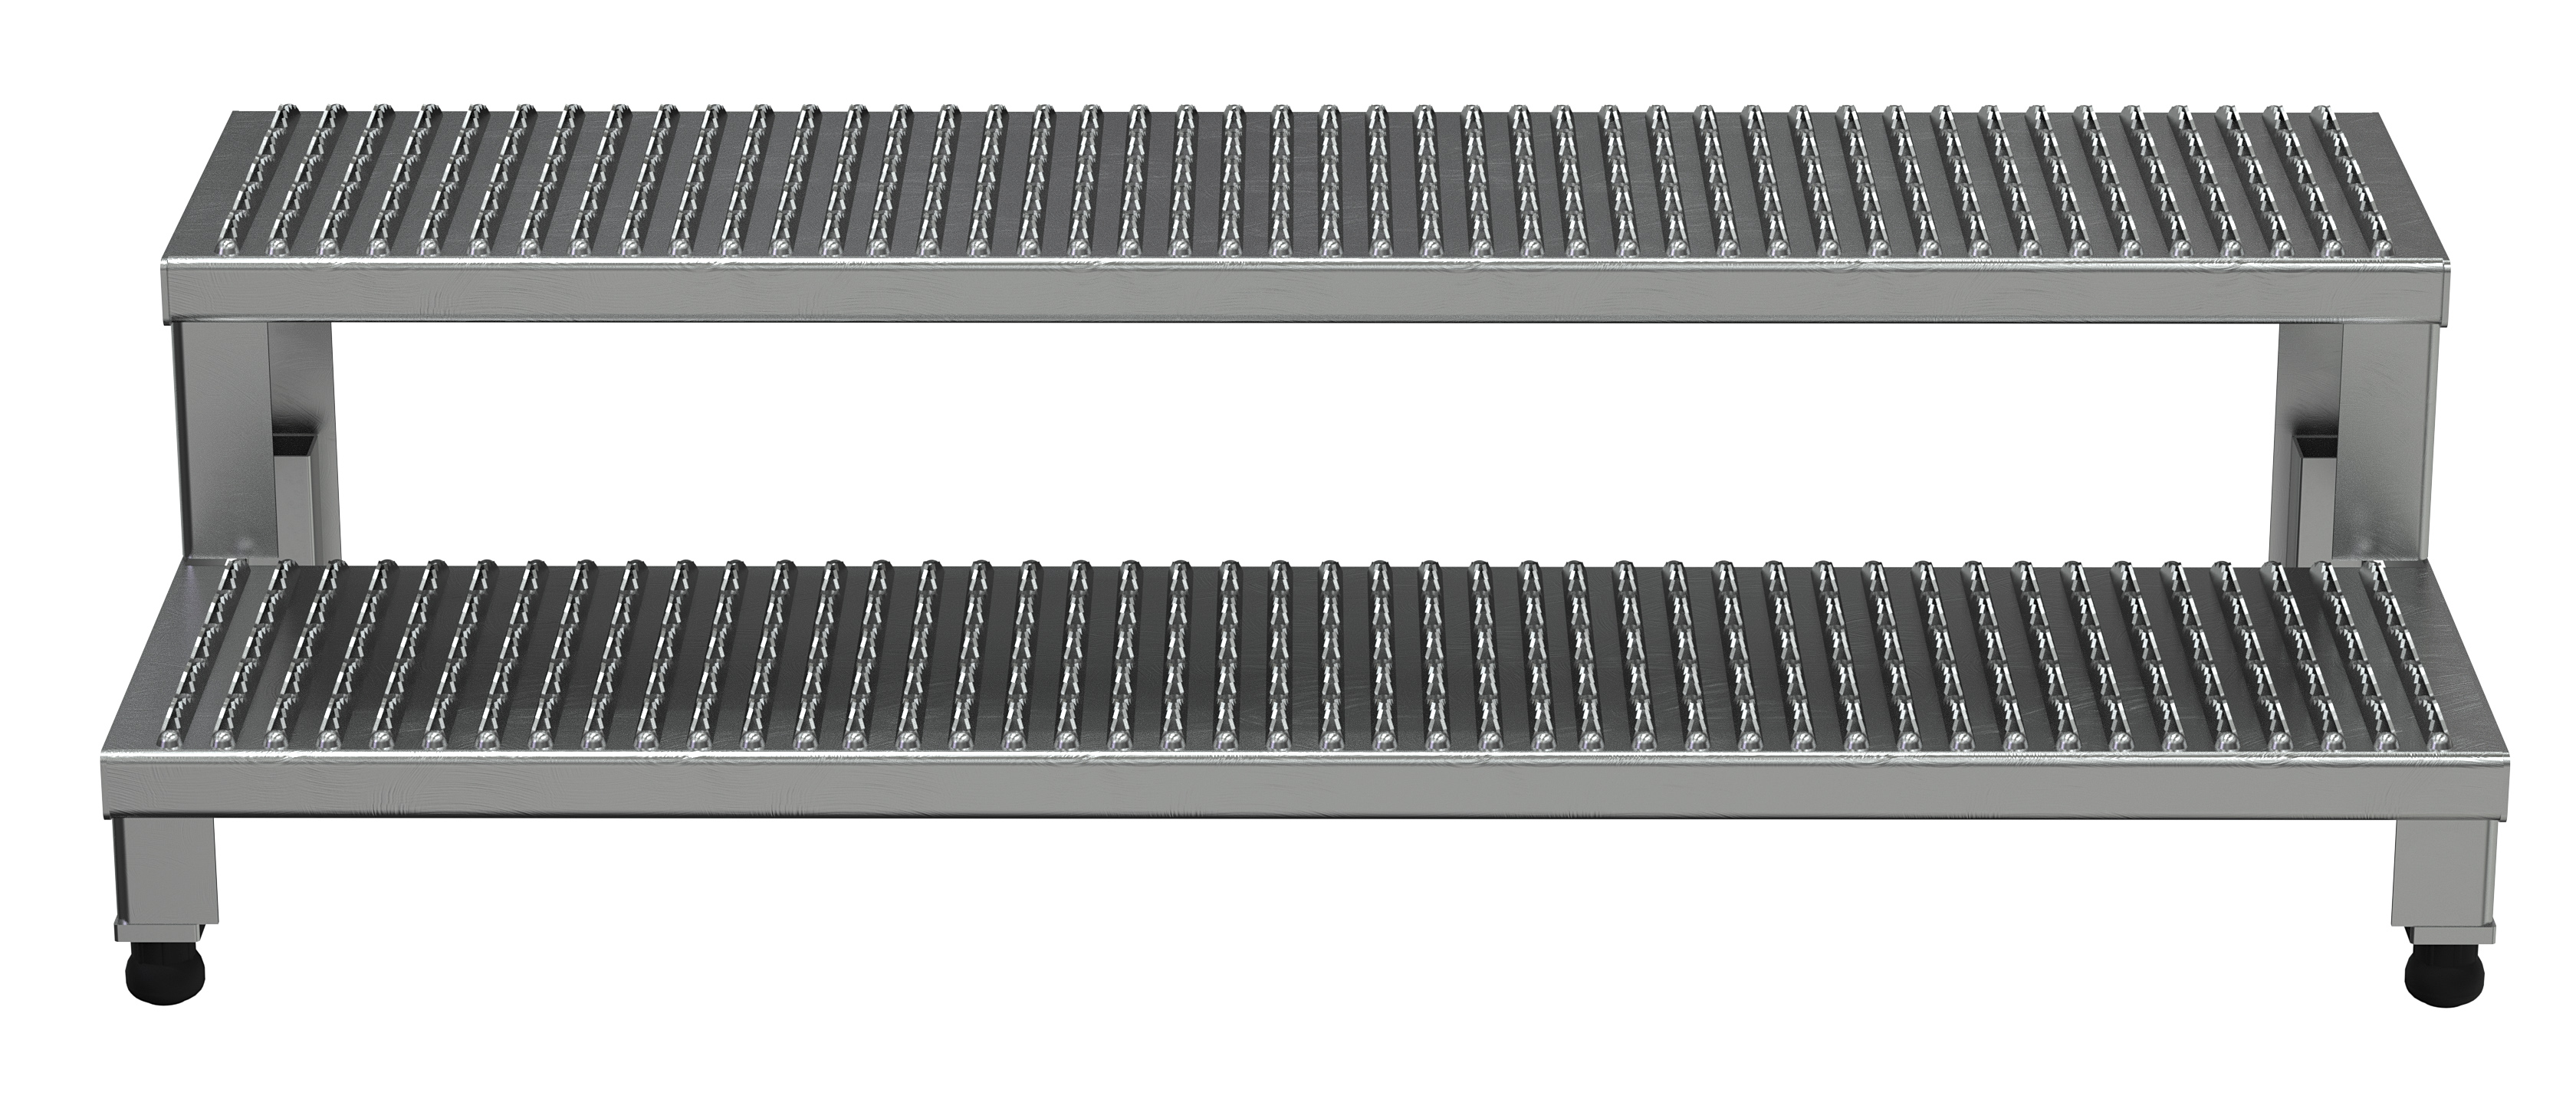 VESTIL ASP-48-A Adjustable Aluminium Step Mate Stand, 2 Step, 48 Inch x 23 Inch Size | AG7MAC